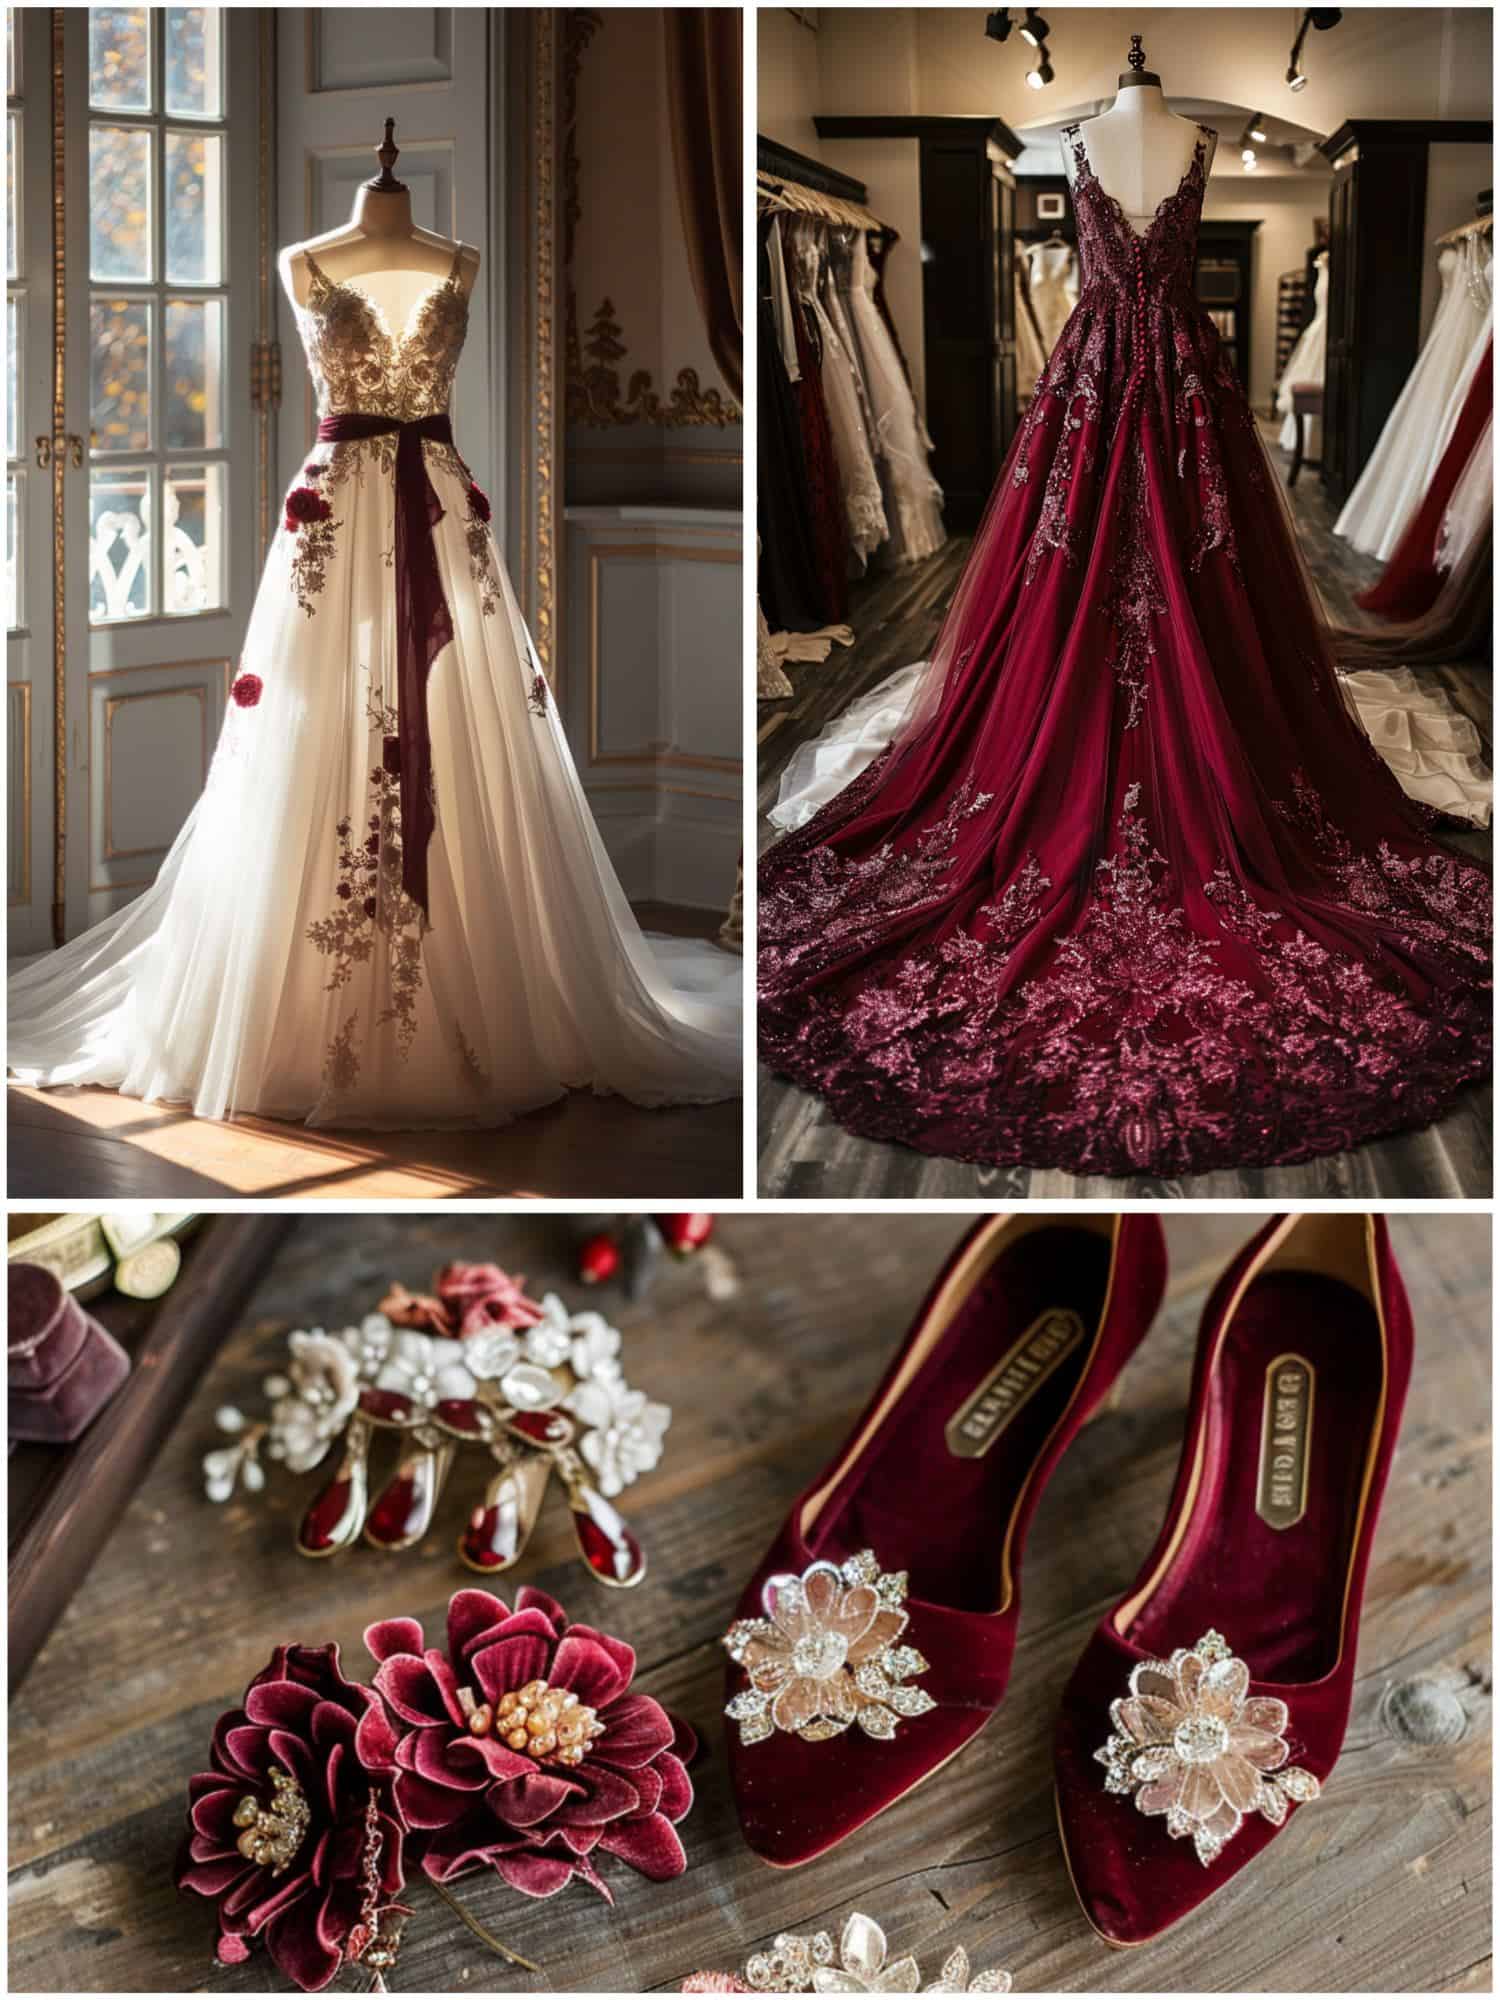 bridal attire and accessories in burgundy